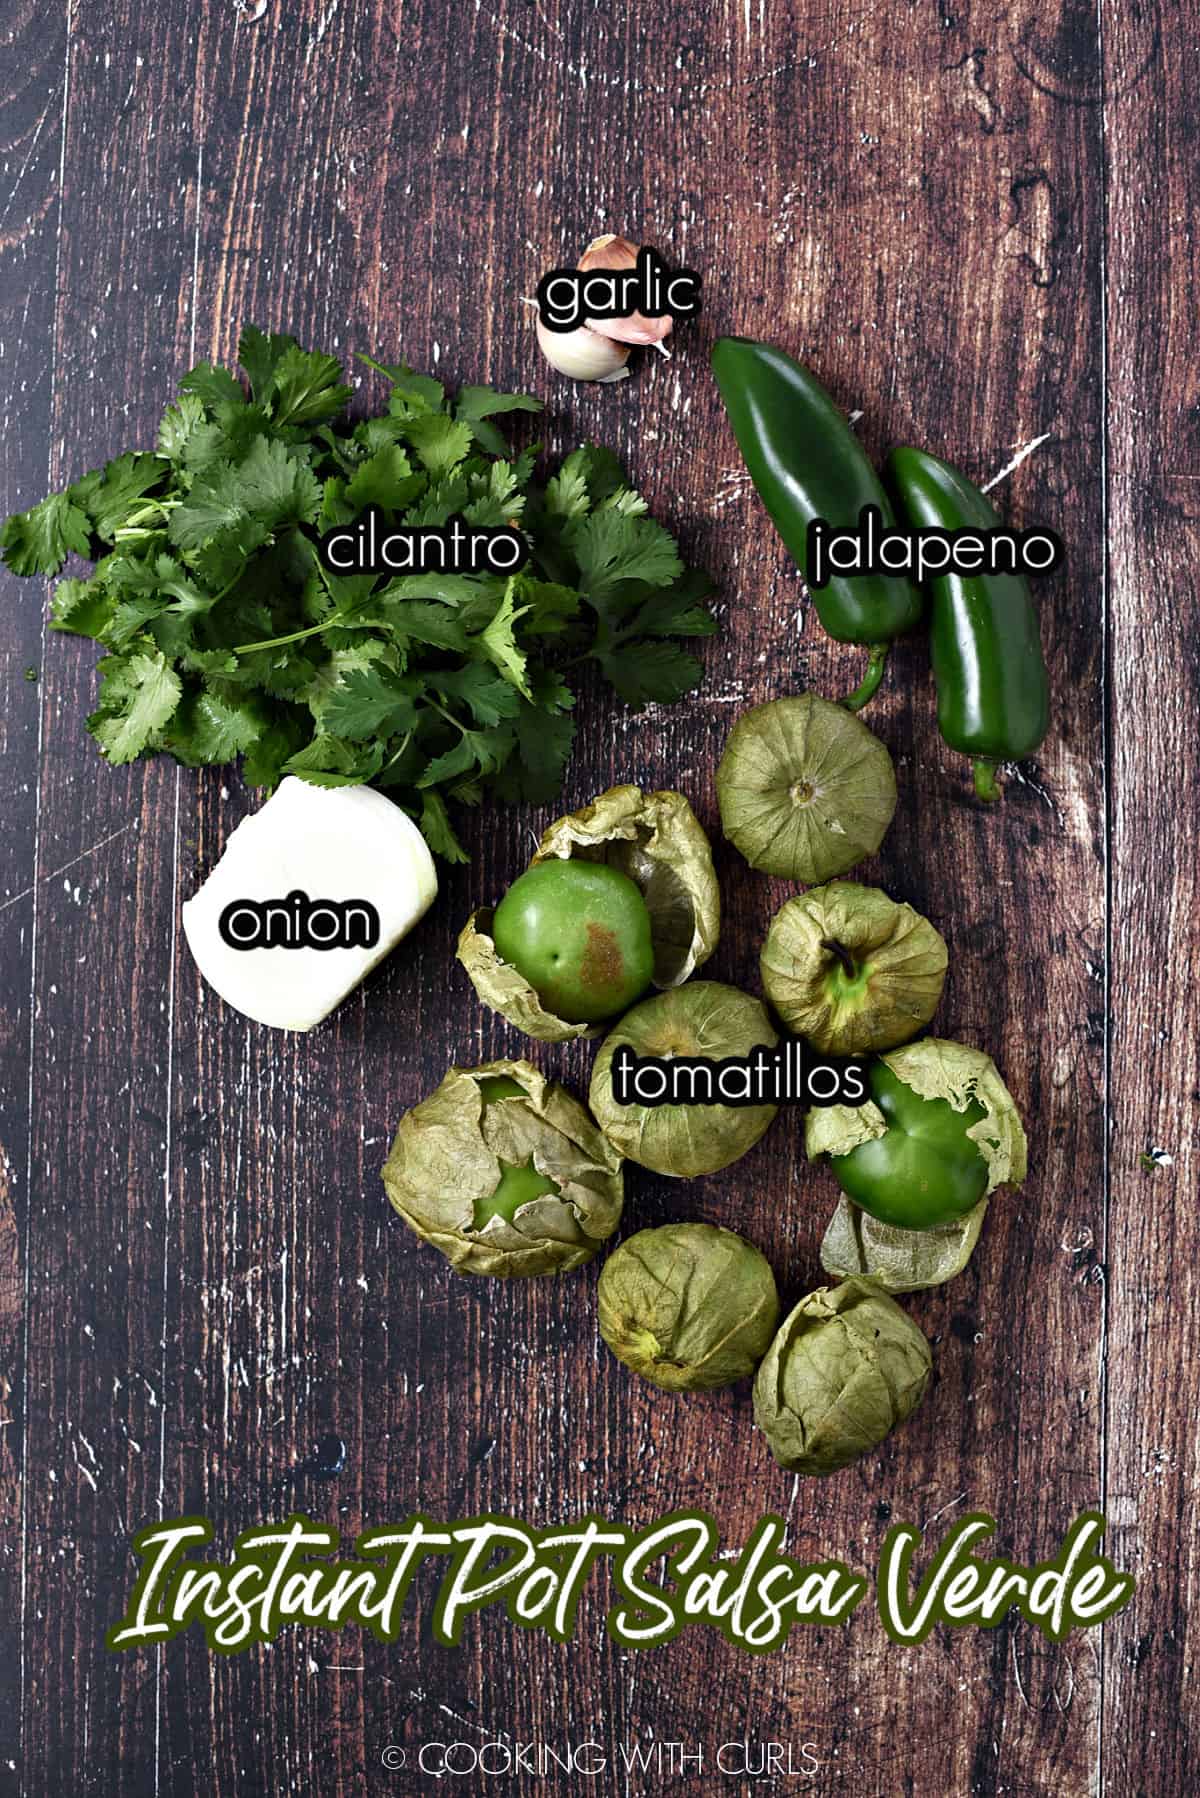 Garlic, cilantro, jalapeno, onion and tomatillos for Instant Pot Salsa Verde. cookingwithcurls.com